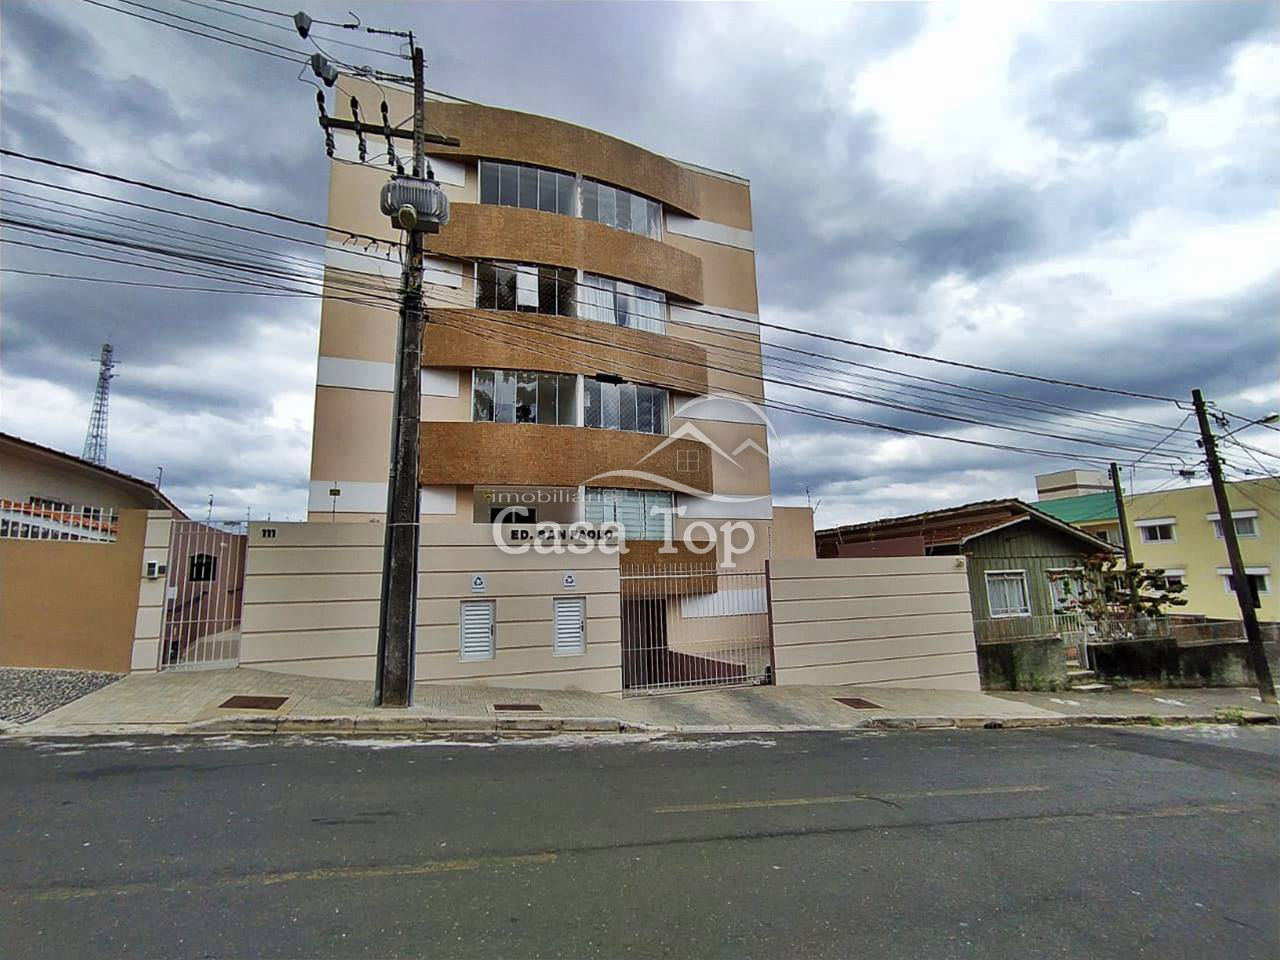 Apartamento semimobiliado à venda Órfãs - Edifício San Paolo